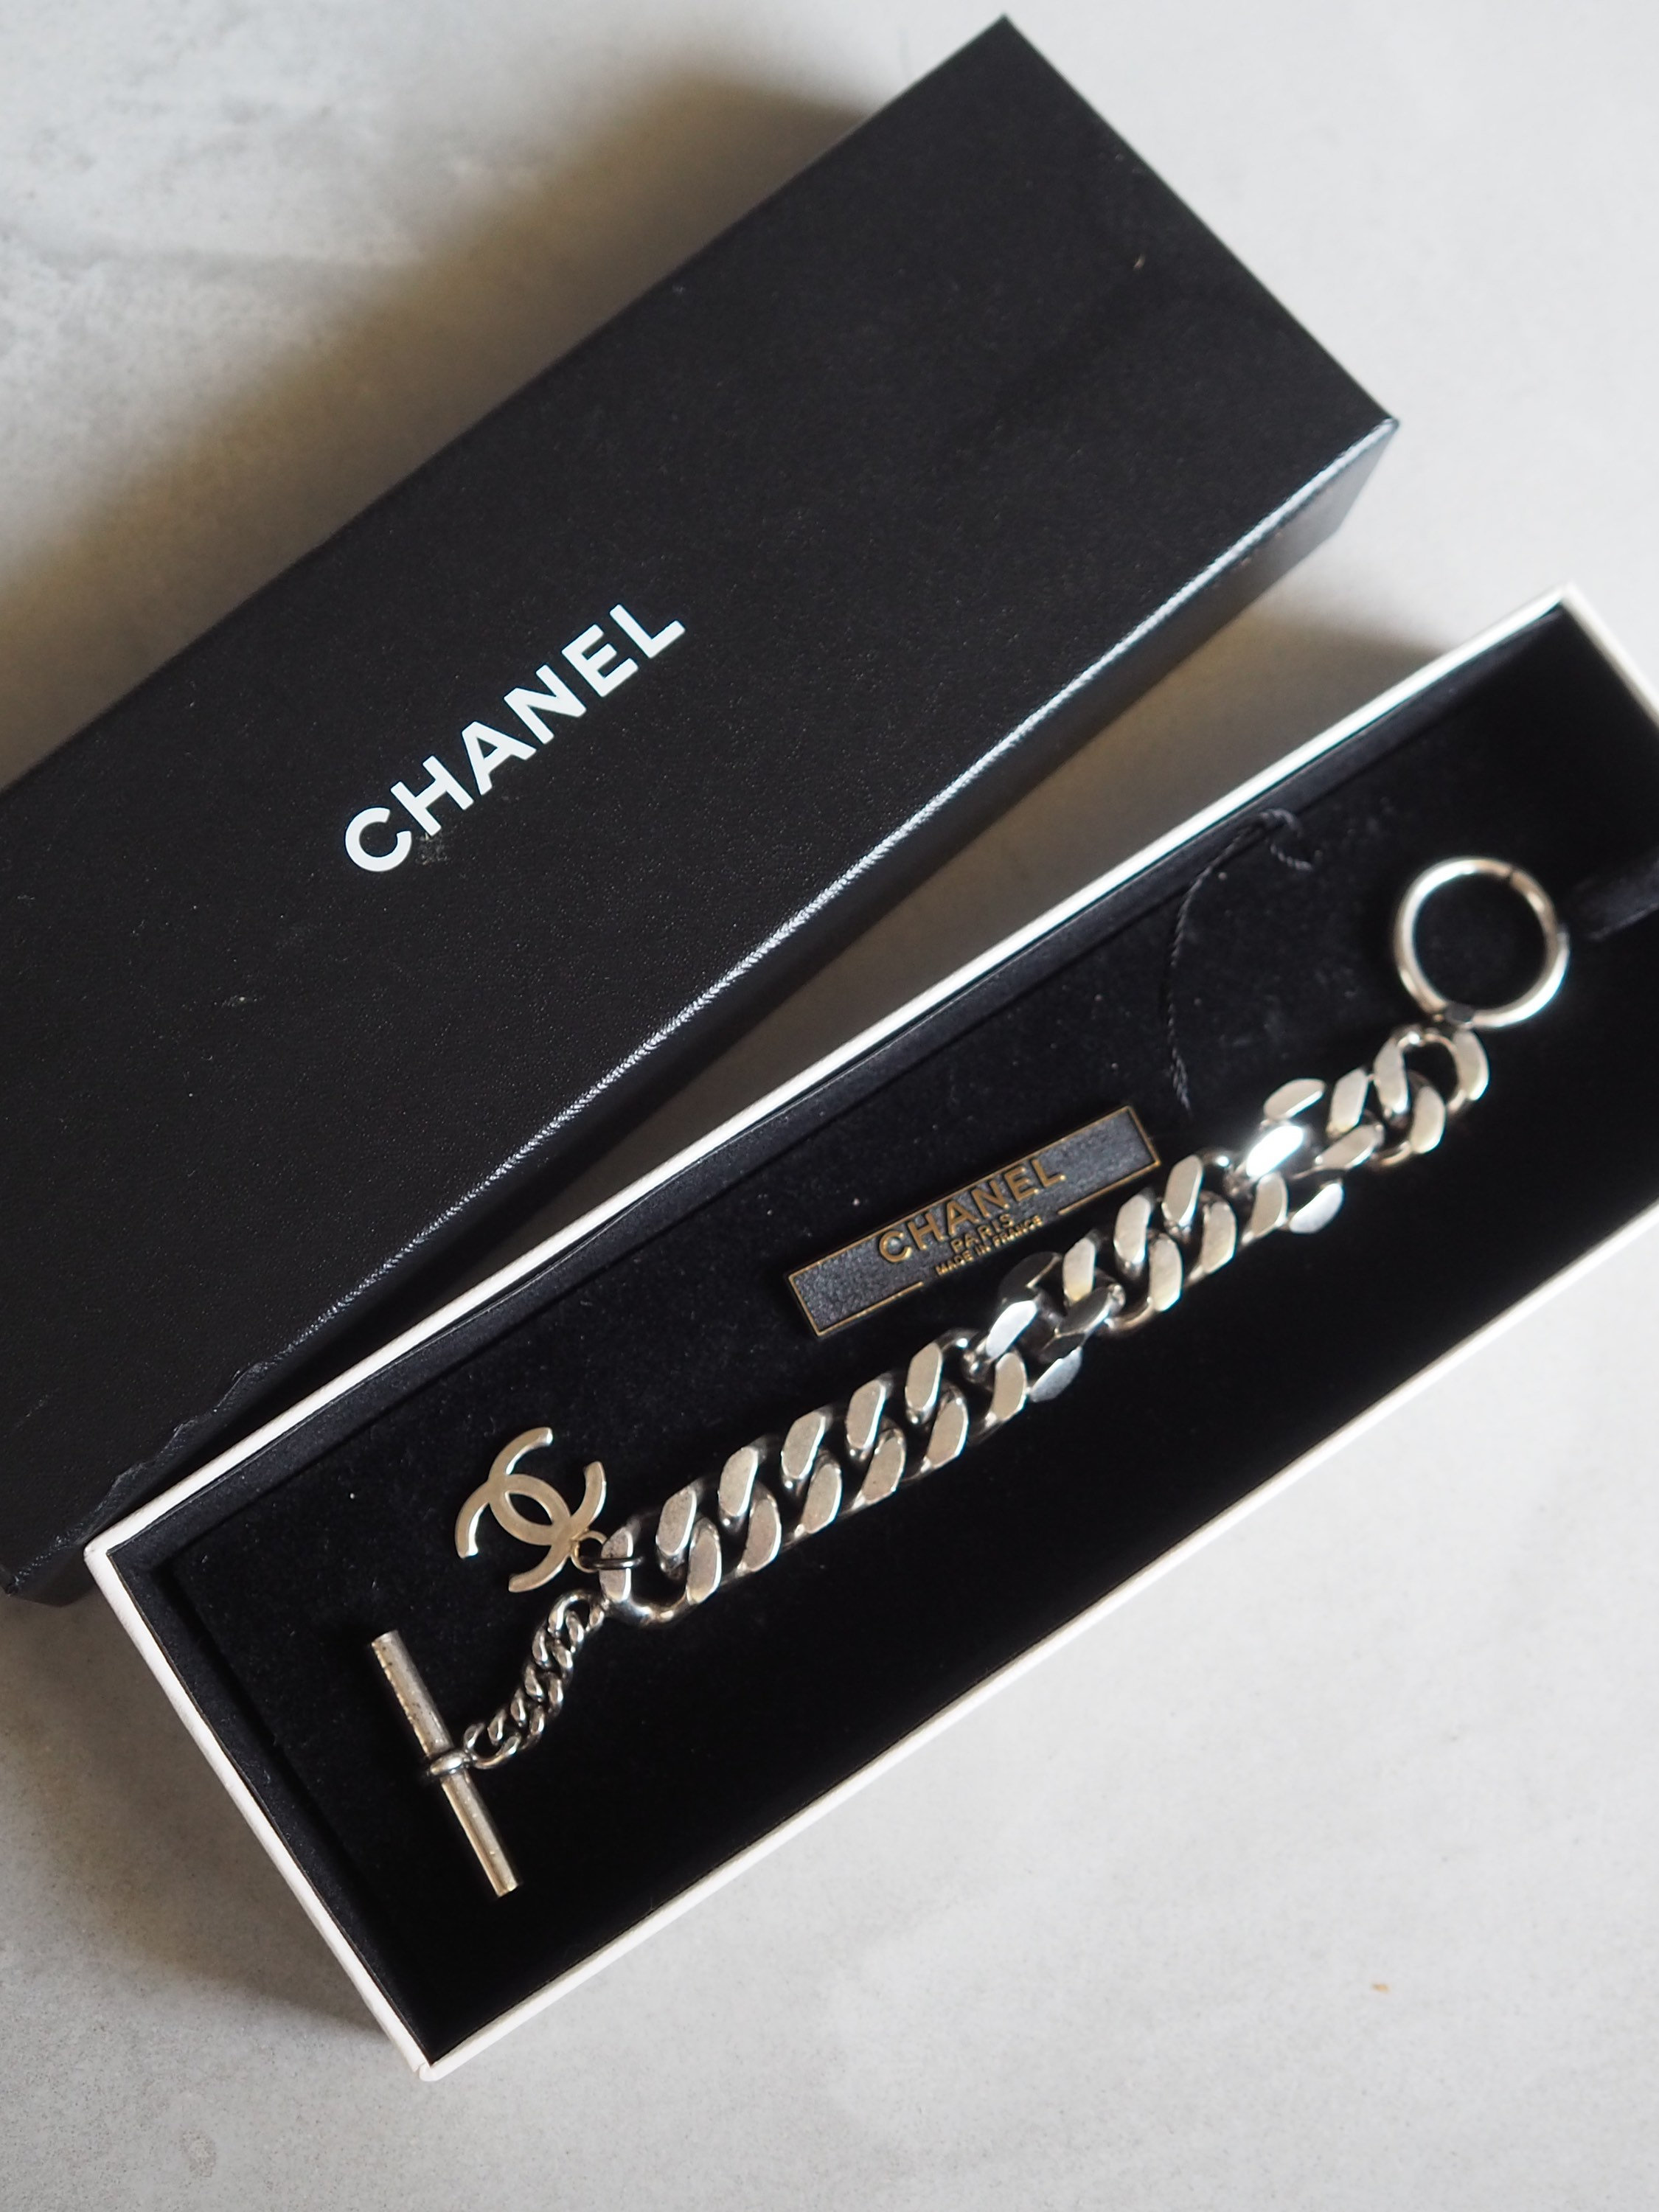 CHANEL Bracelet CC Logo Charm Multi Pearls Gold Tone - Chelsea